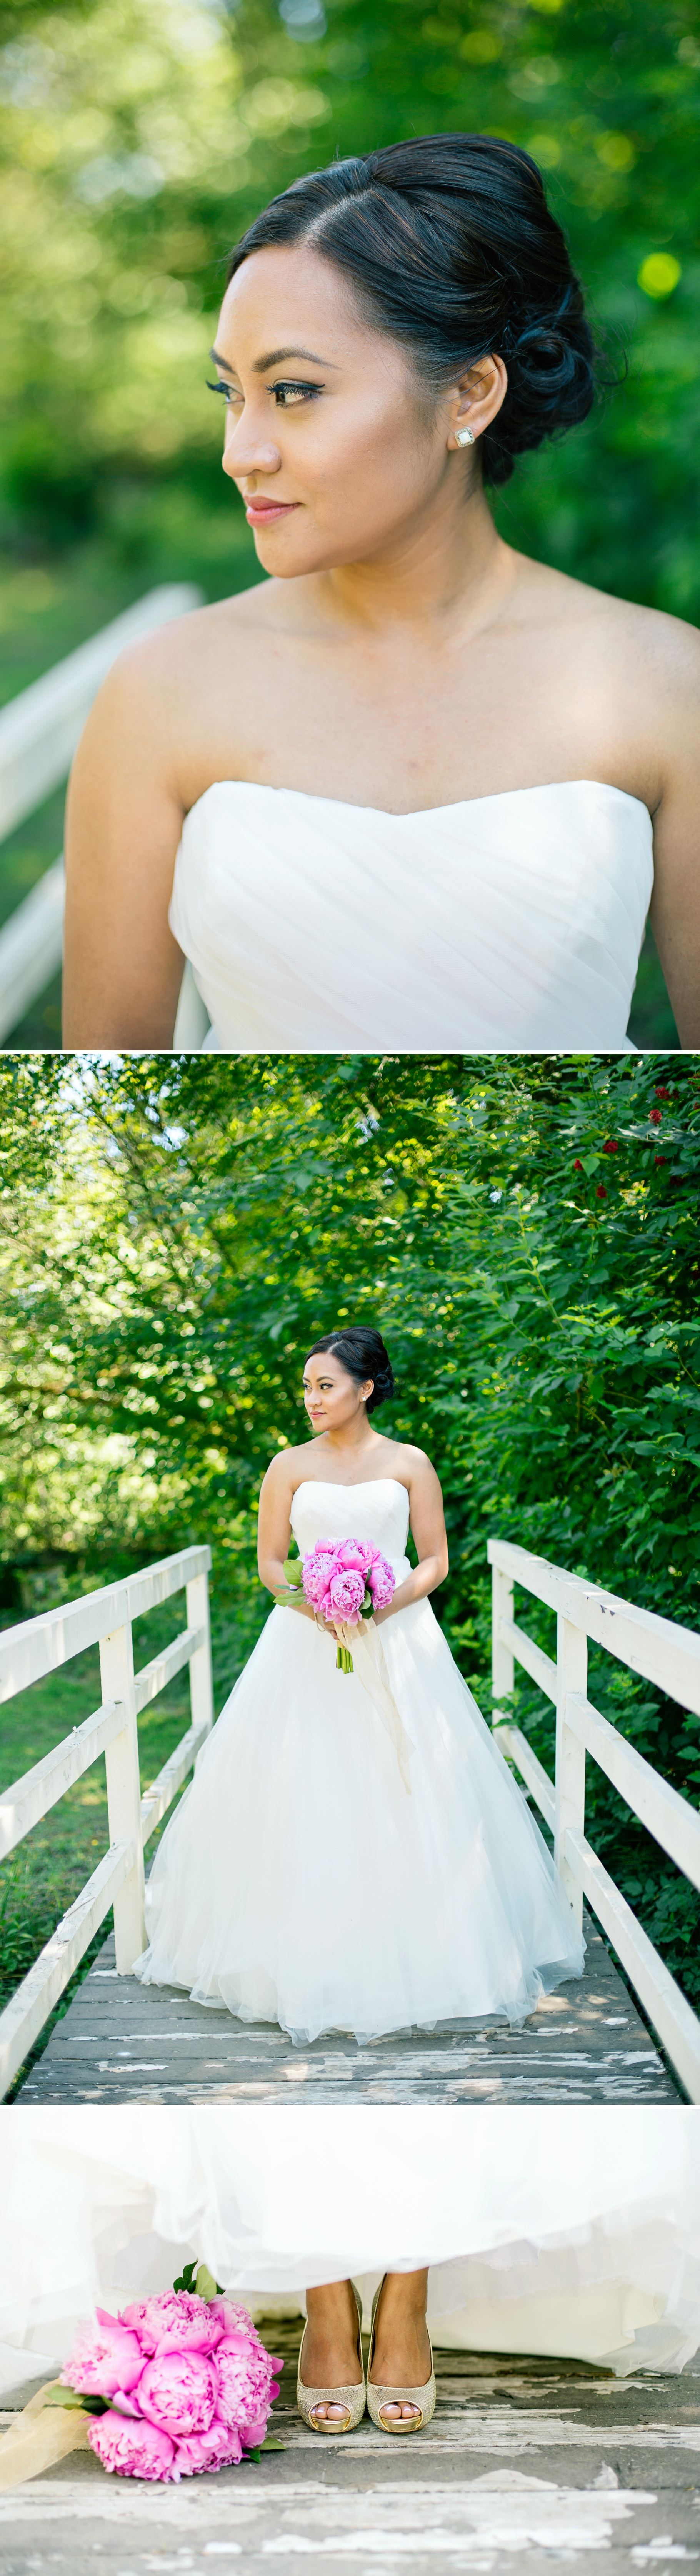 16-Bridal-Portraits-Bride-Photographer-Peony-Bouquet-Rock-Creek-Gardens-Seattle-Wedding-Photography-by-Betty-Elaine